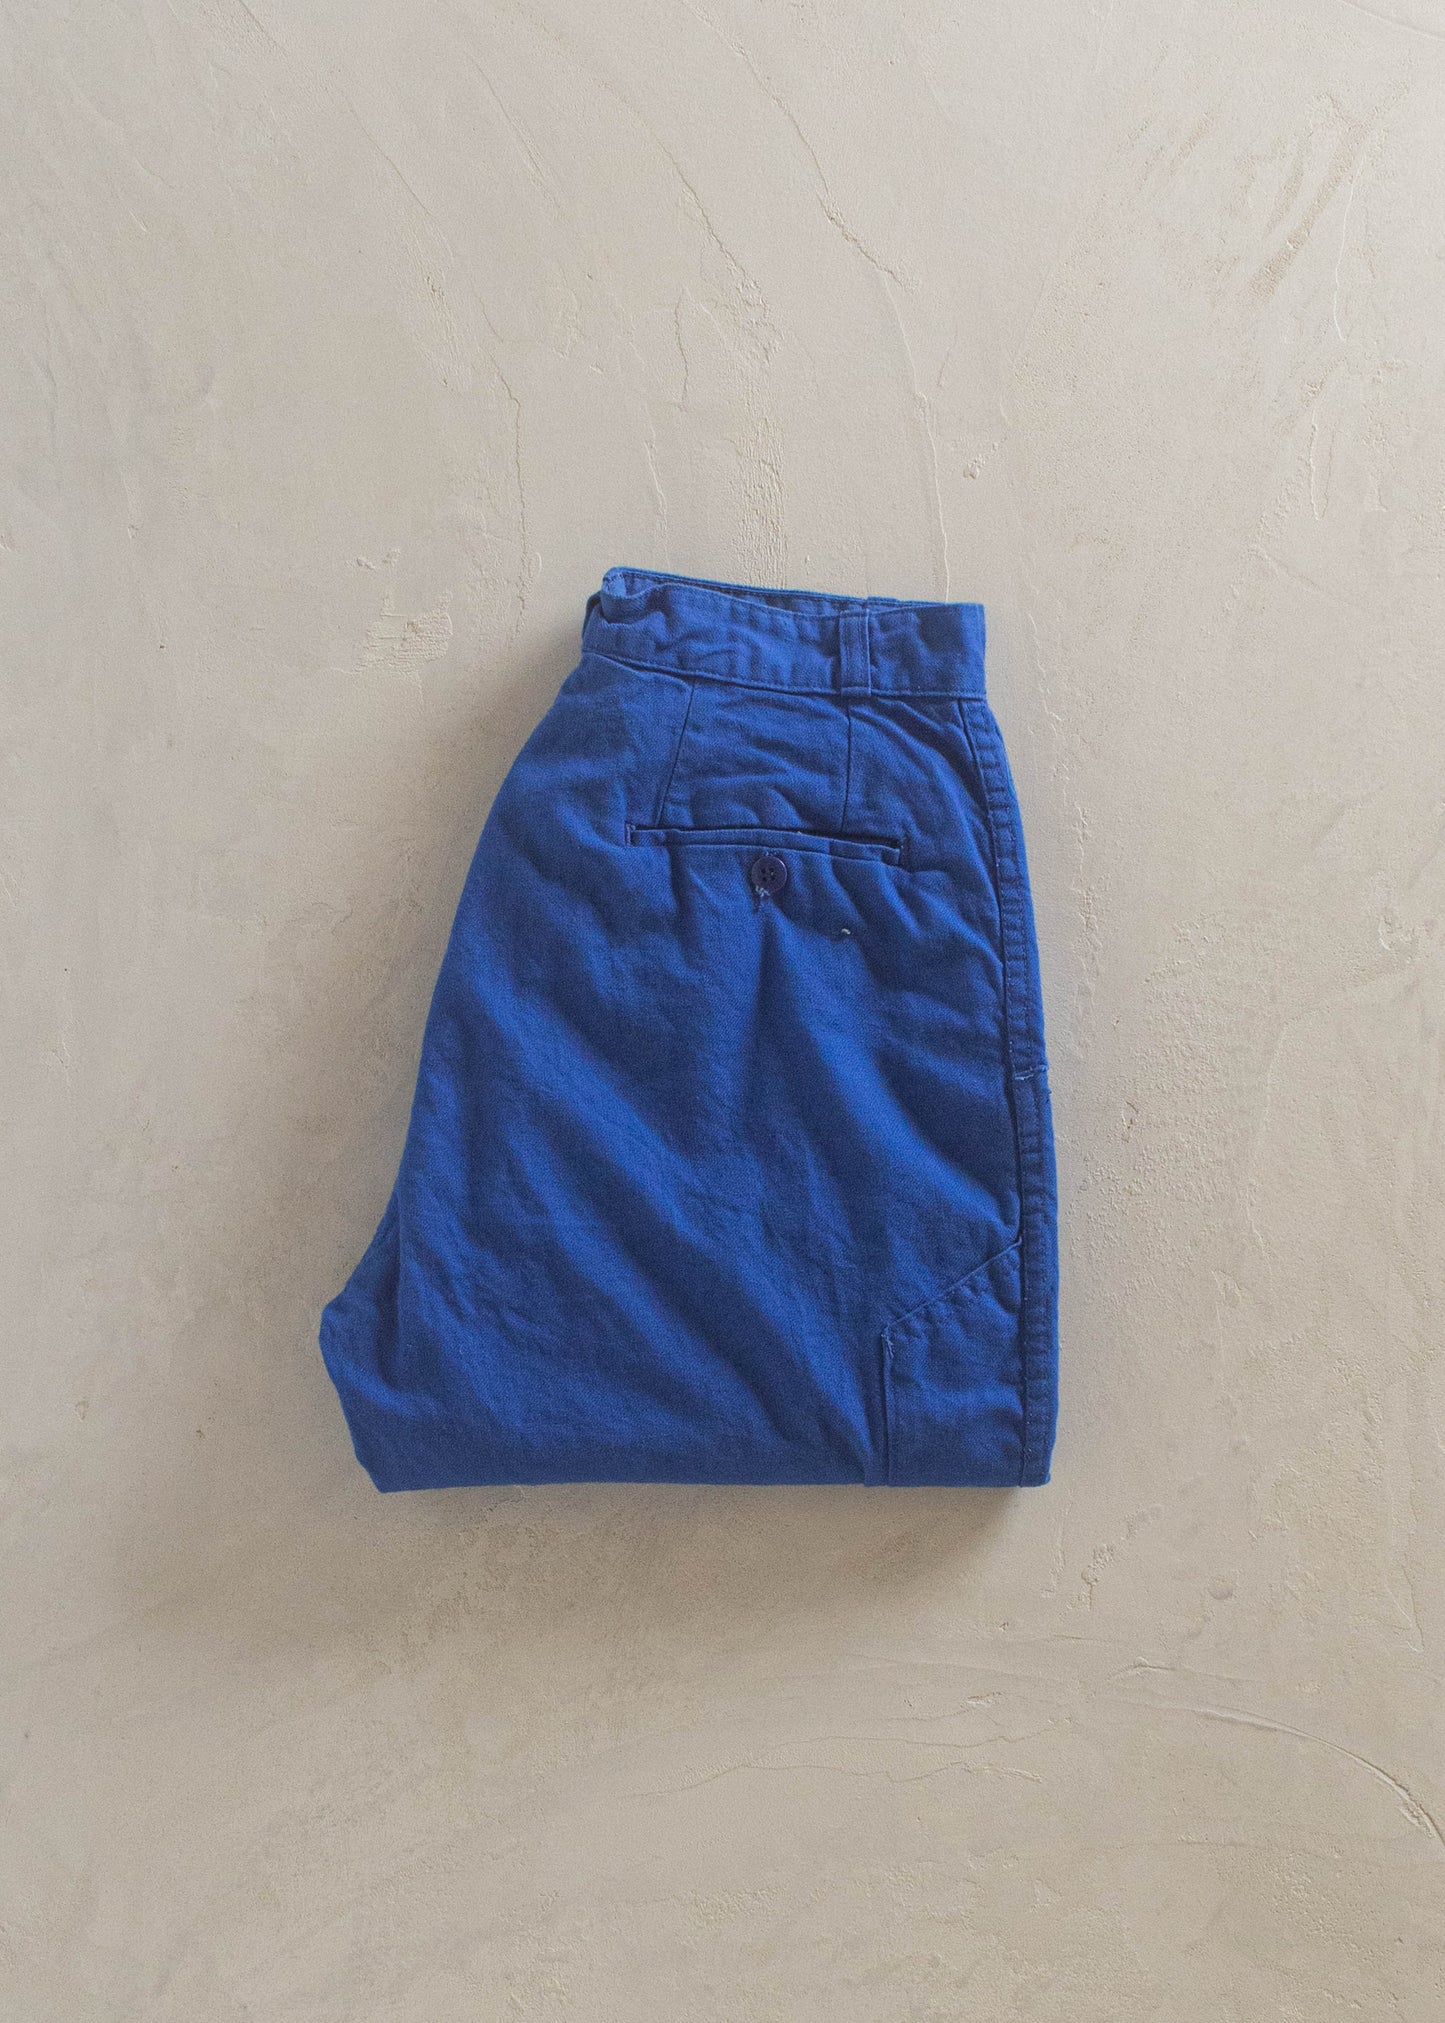 1980s Sanfor French Workwear Chore Pants Size Women's 30 Men's 32